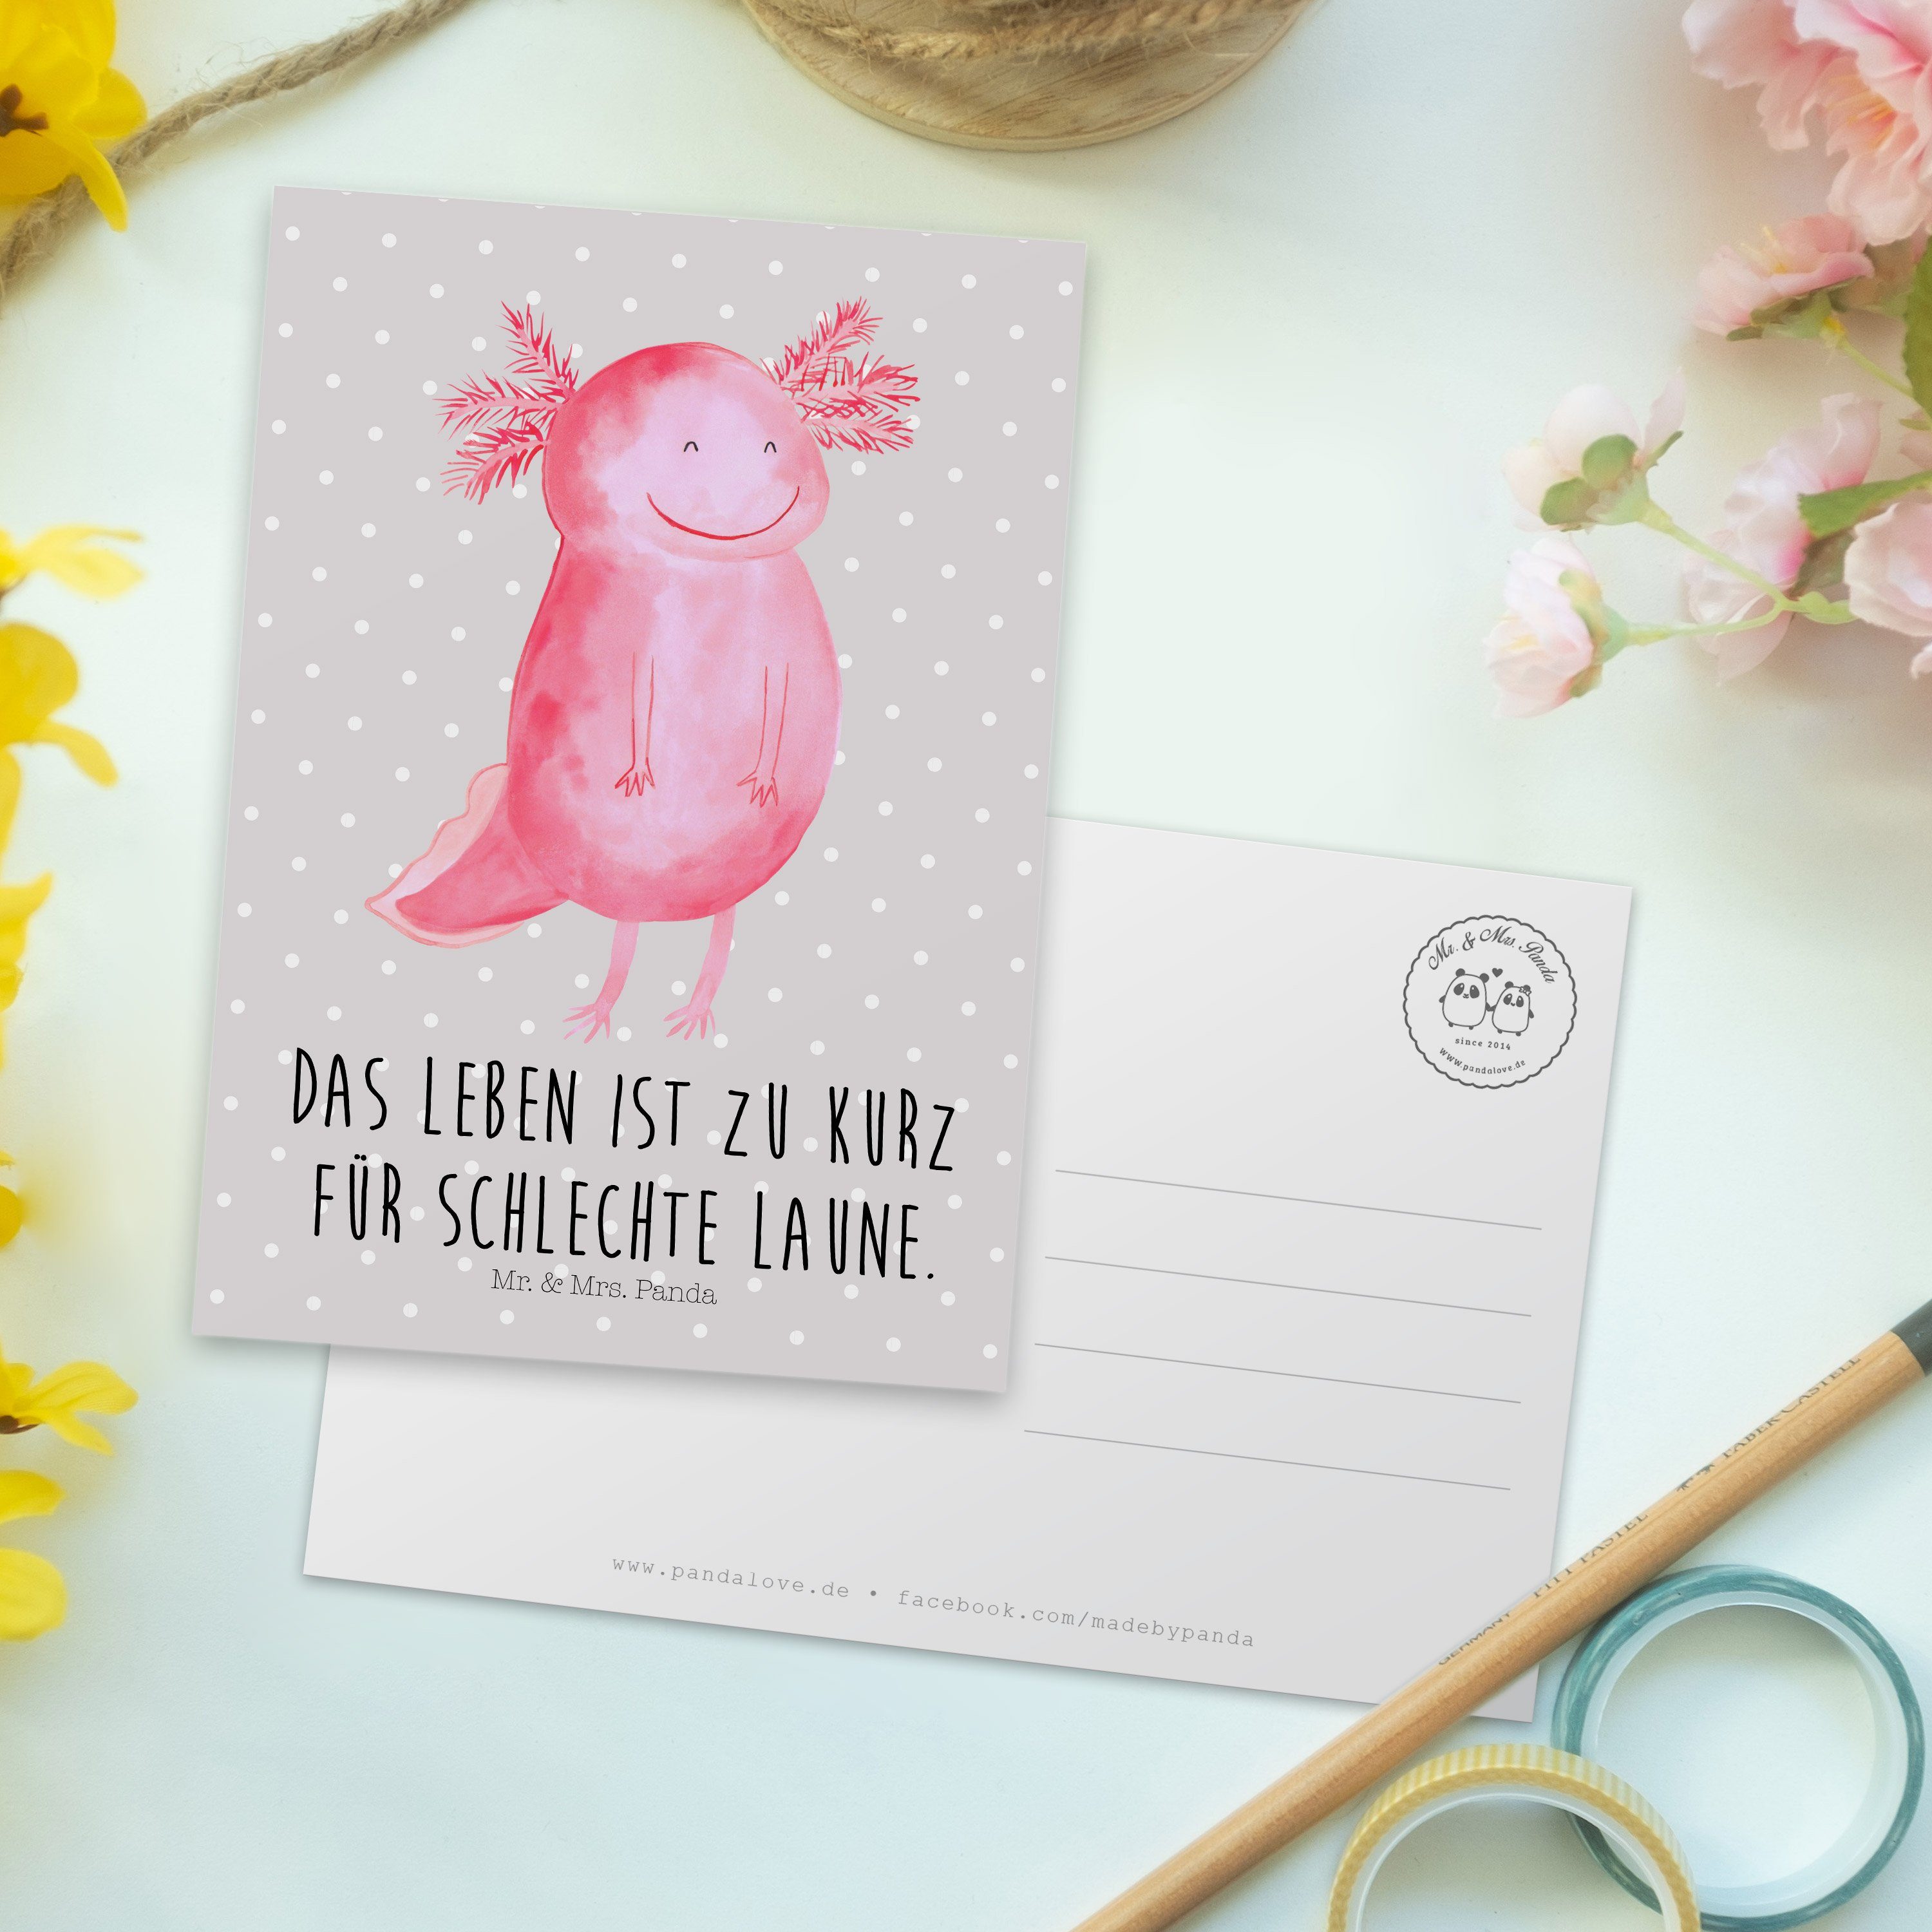 Mr. Grau Axolotl Panda Pastell & glücklich Geburtstagskarte, Mrs. - - Geschenk, Schwan Postkarte